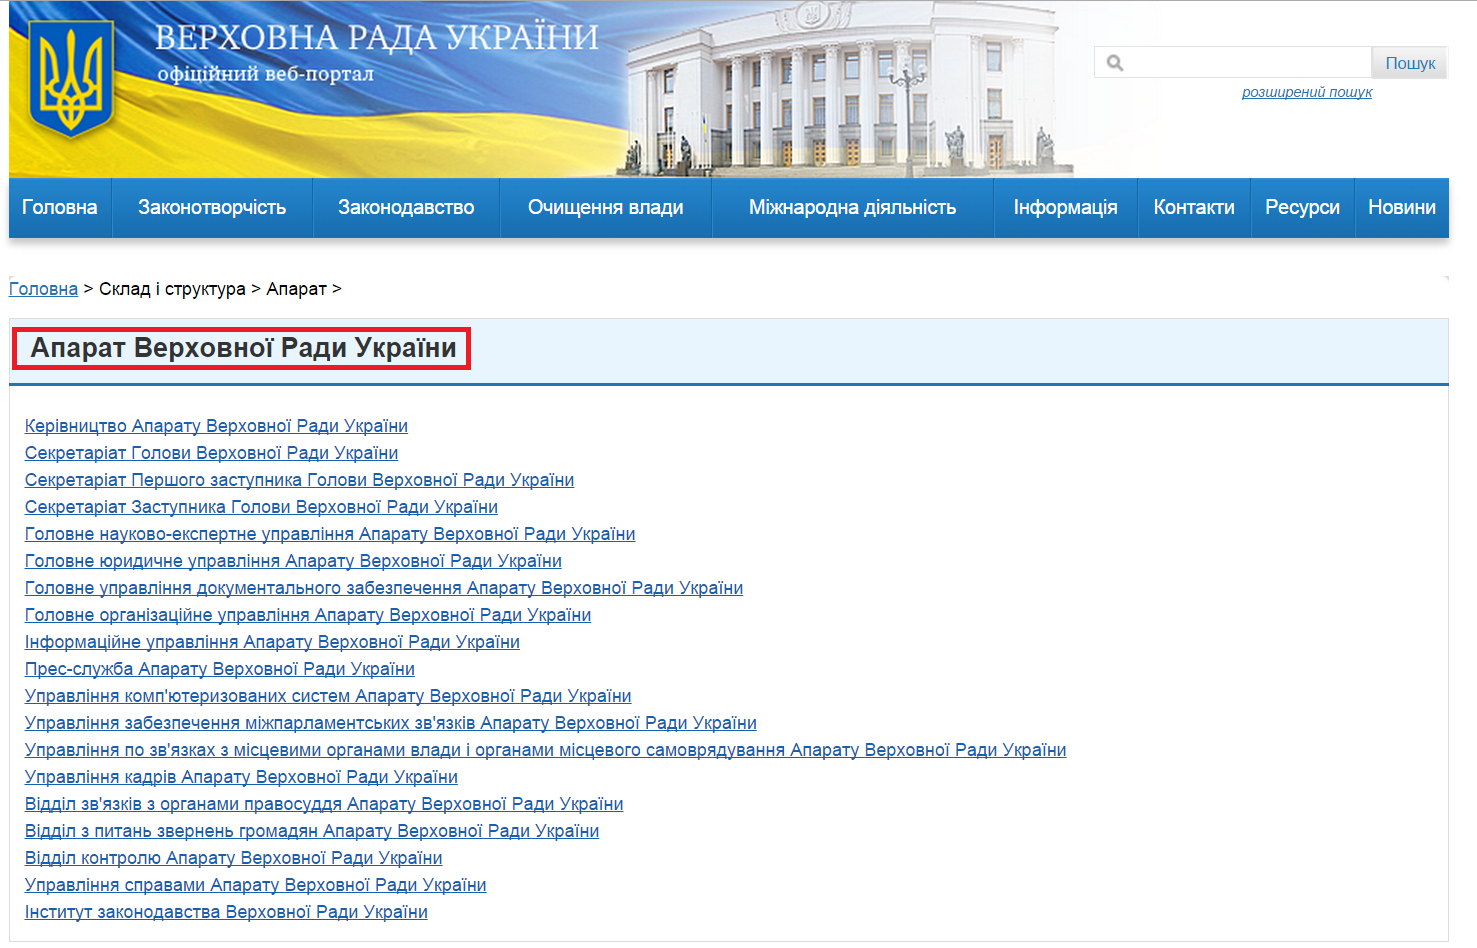 http://w1.c1.rada.gov.ua/pls/site2/p_aparat